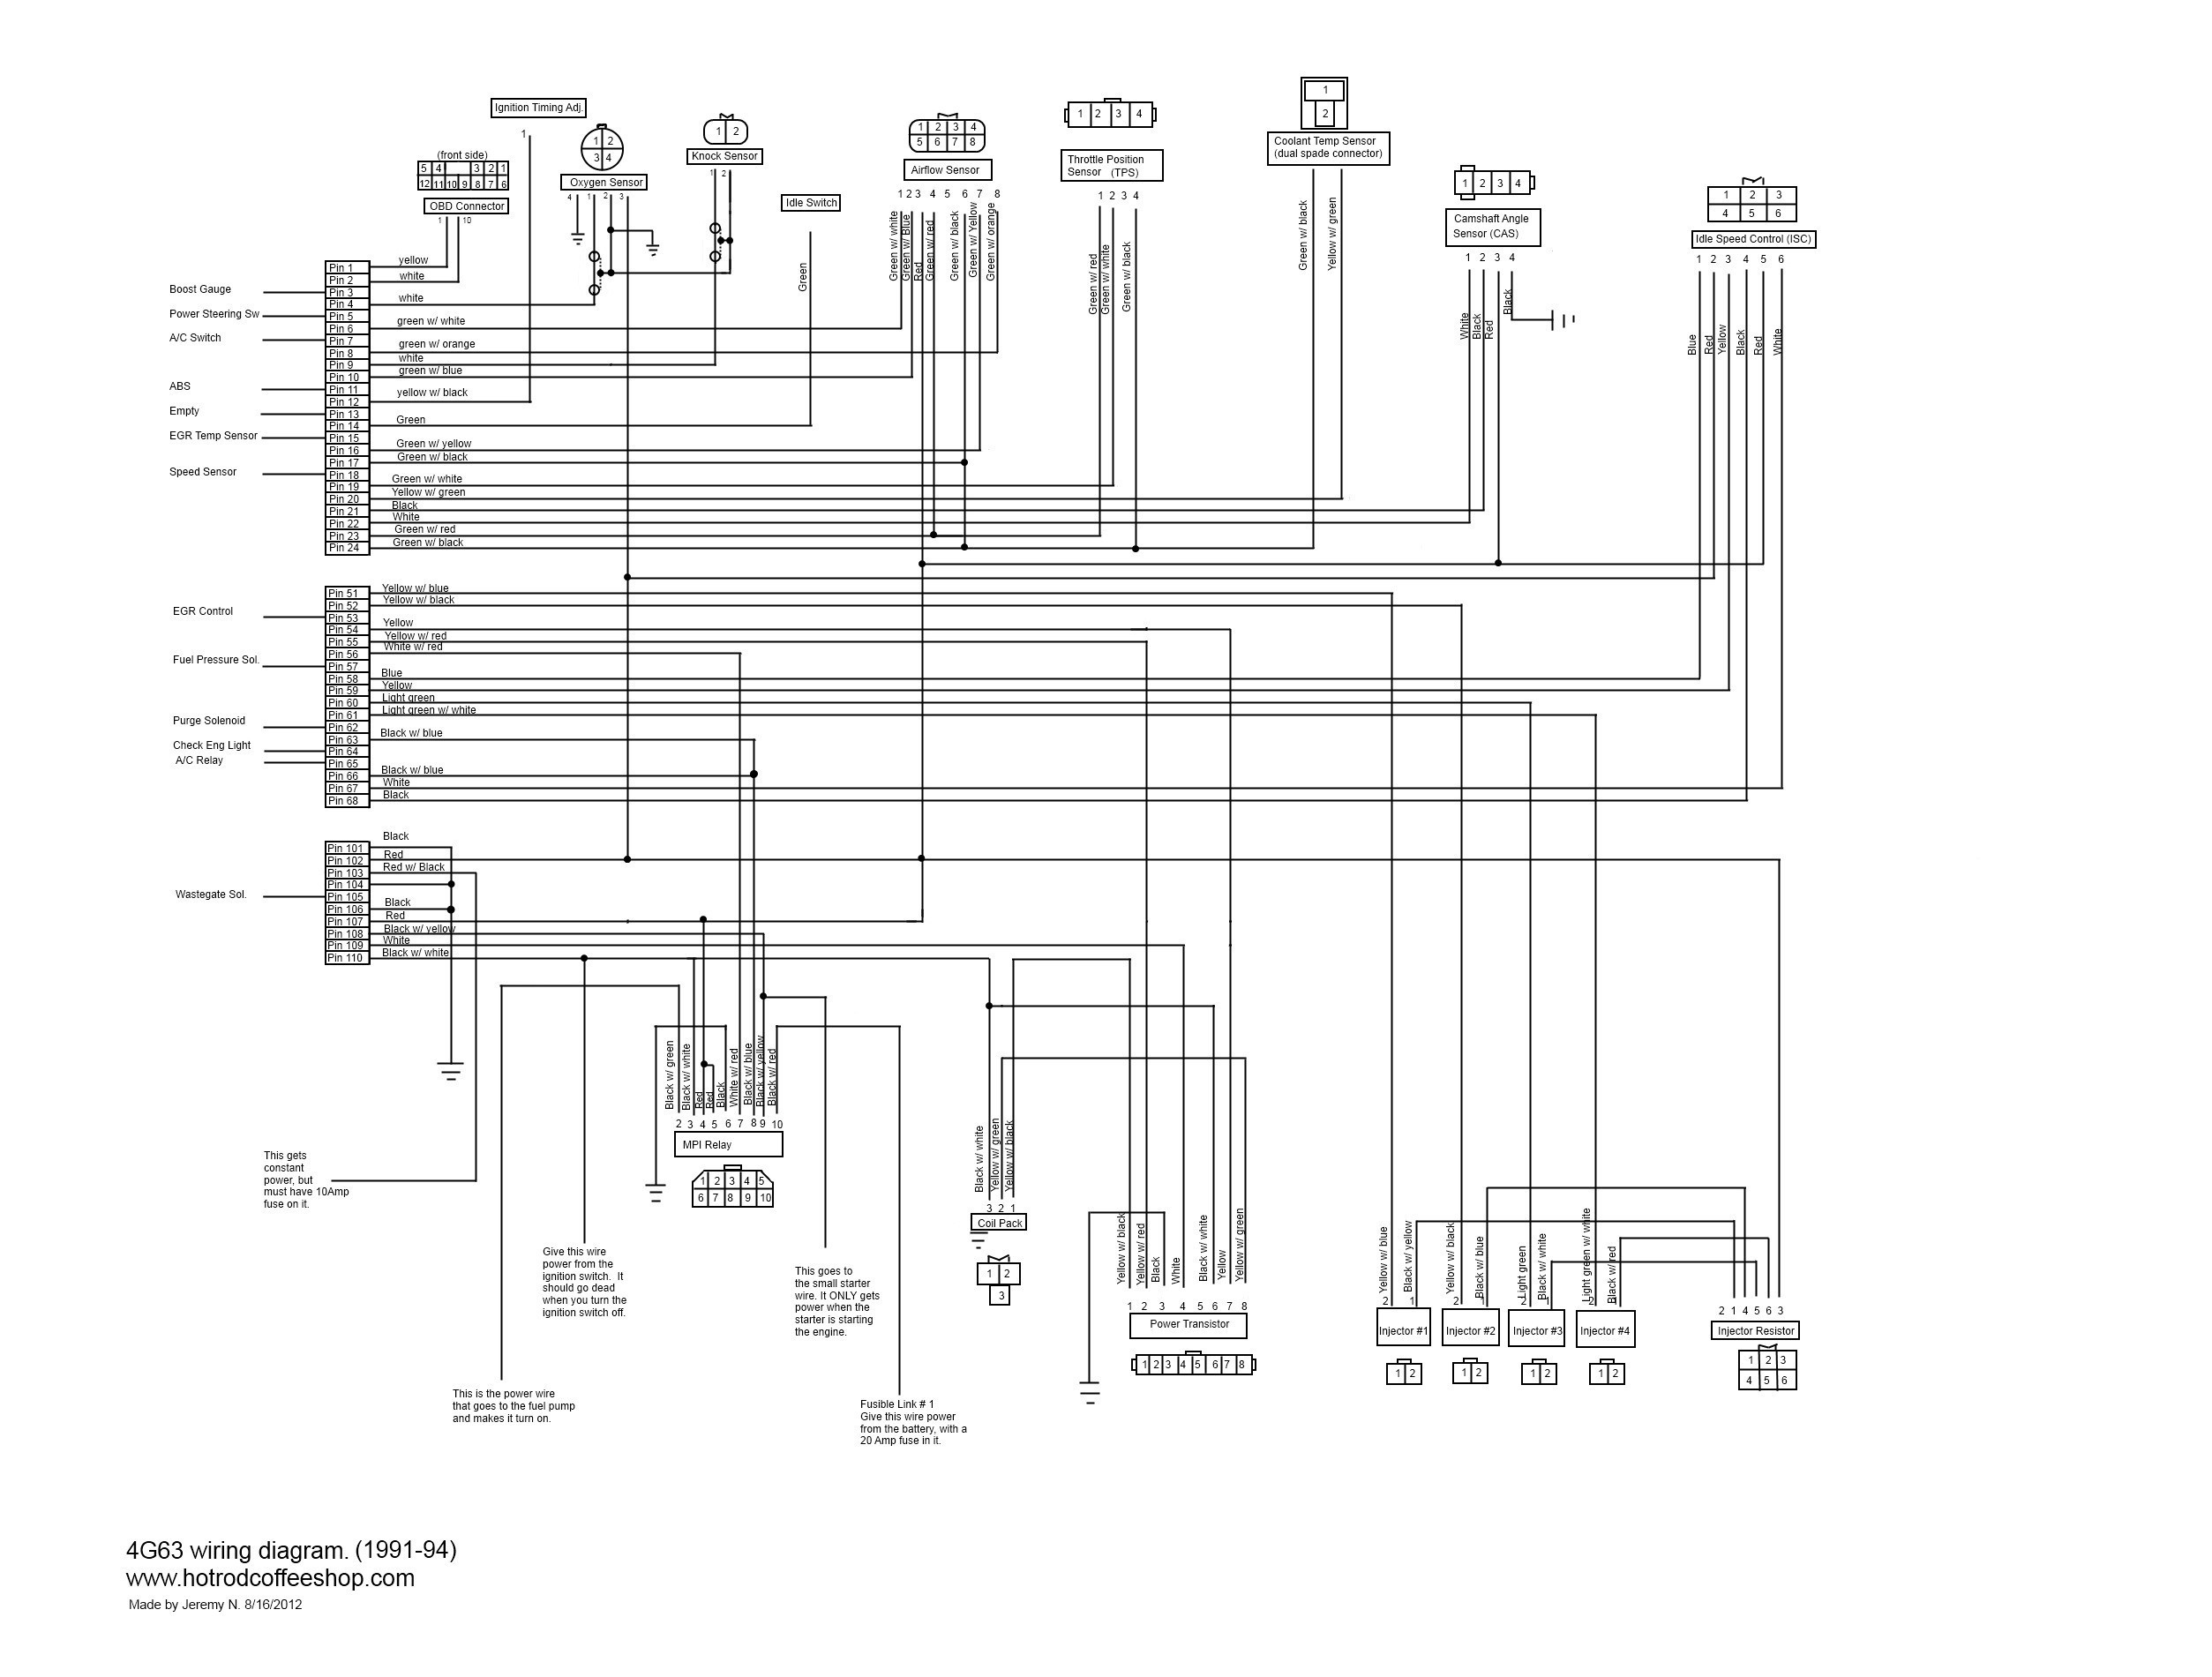 Mitsubishi Engine Diagram Mitsubishi Galant Engine Diagram Wiring Diagram Mitsubishi Of Mitsubishi Engine Diagram